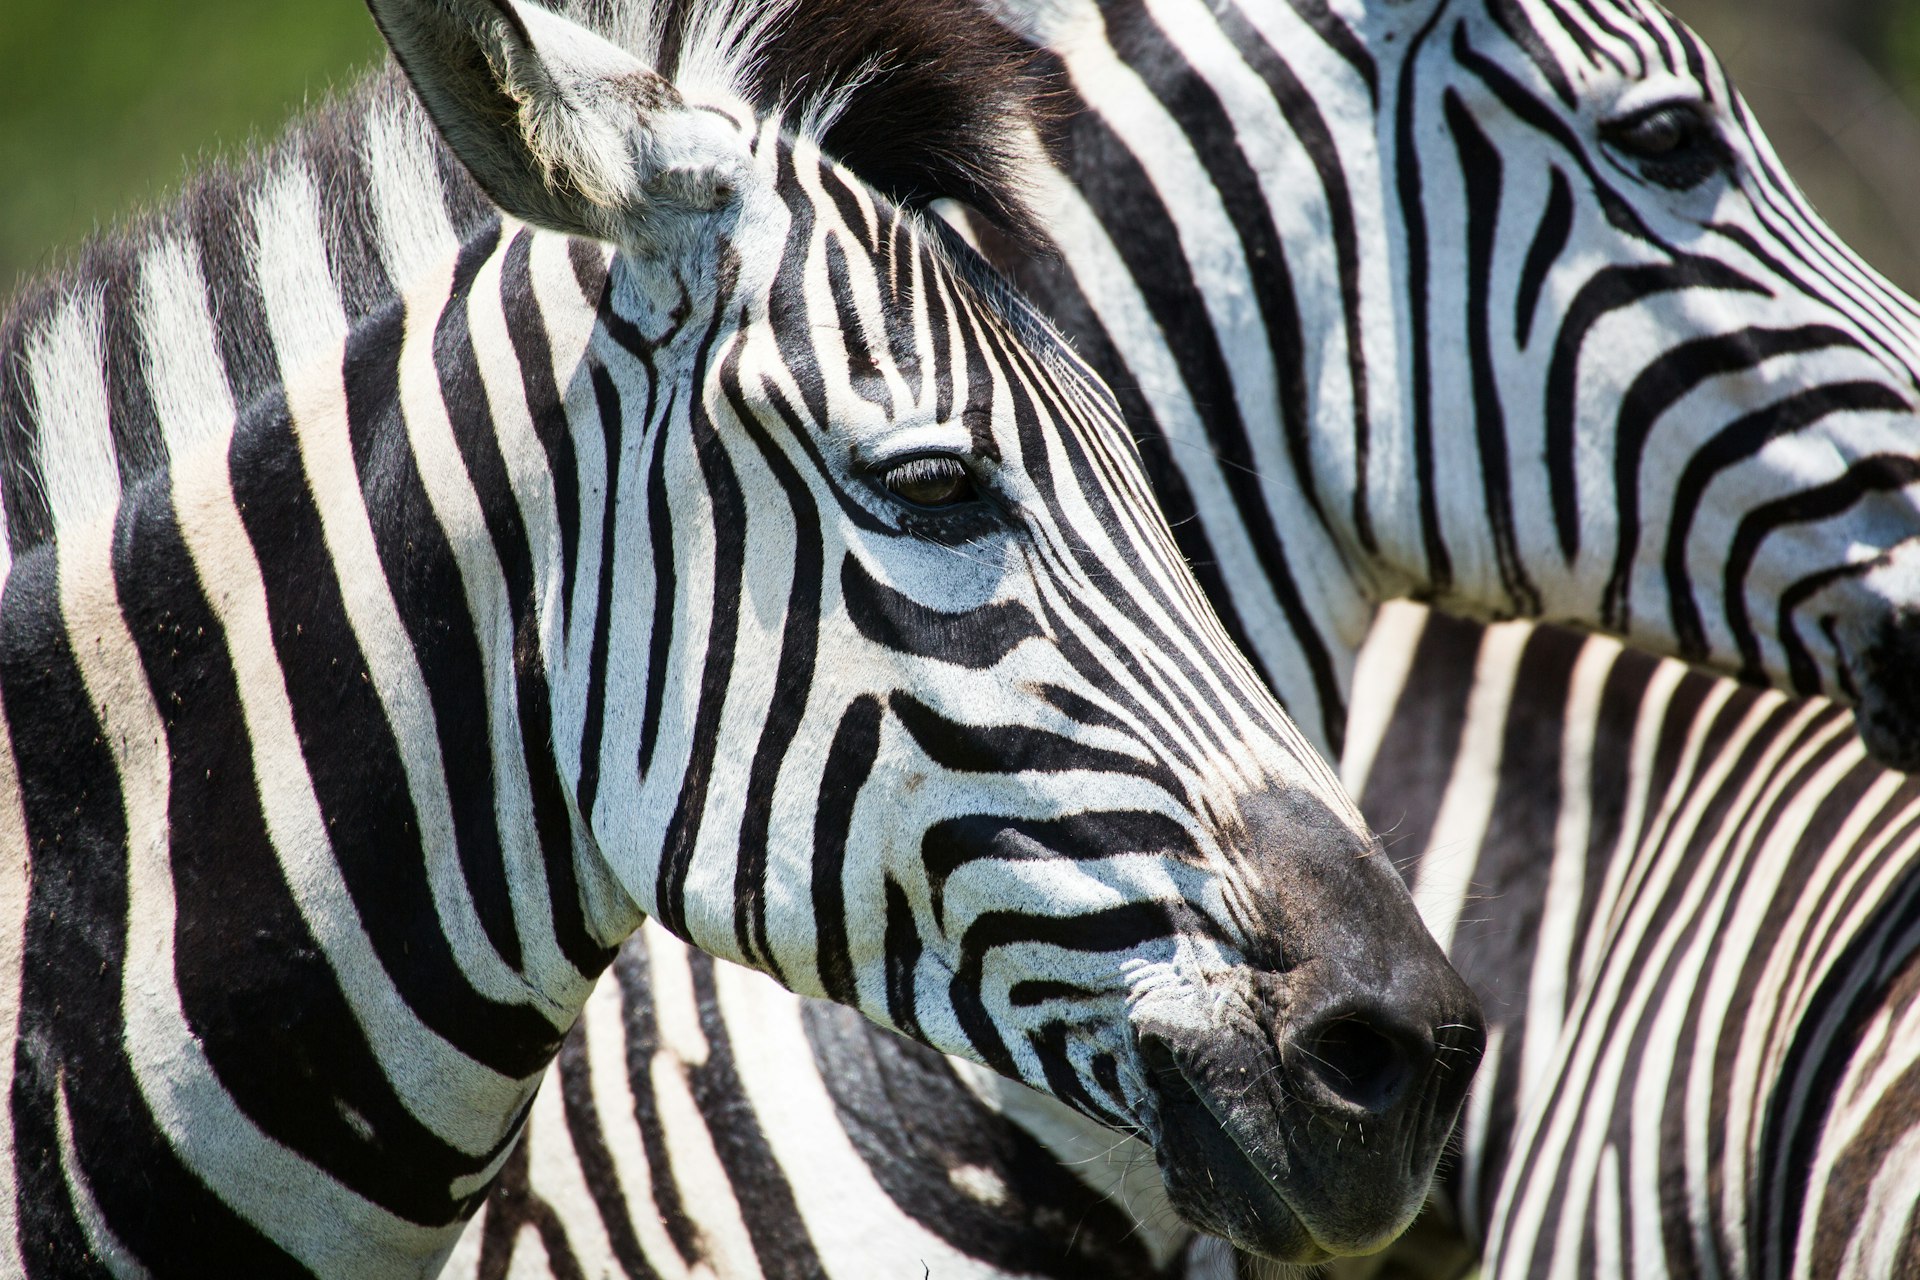 Zebras gather close together